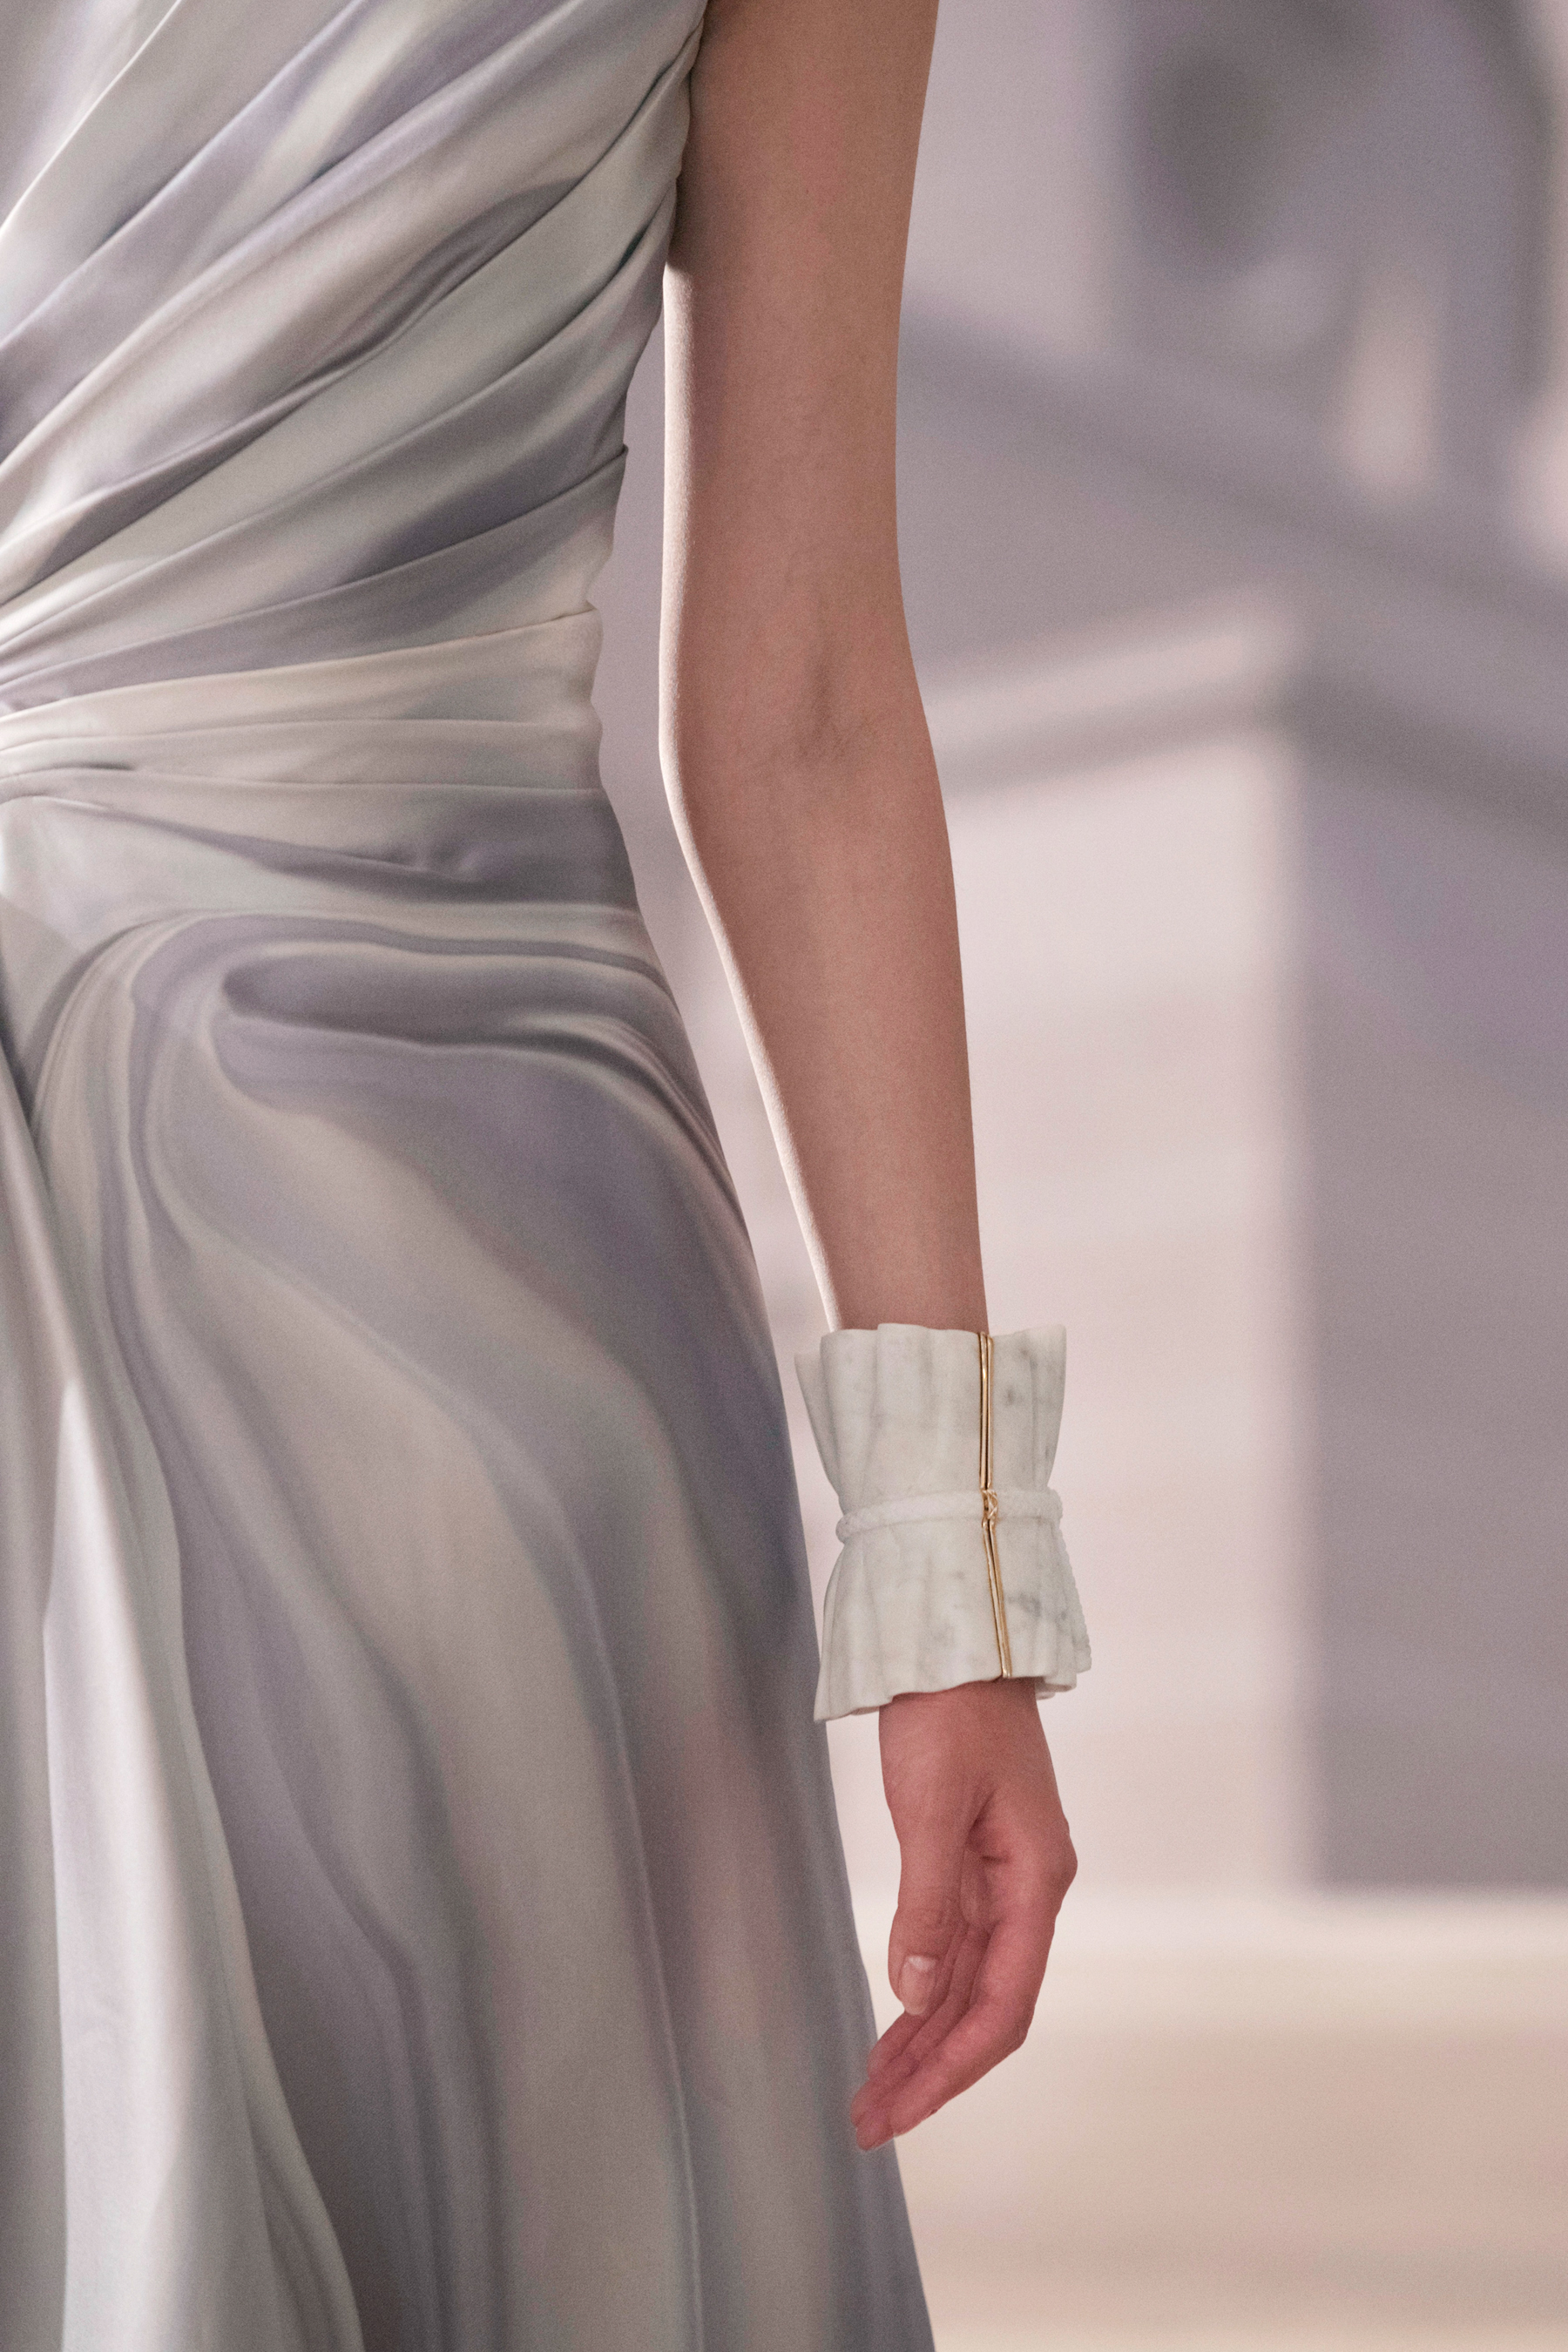 Fendi Fall 2021 Couture Details Fashion Show